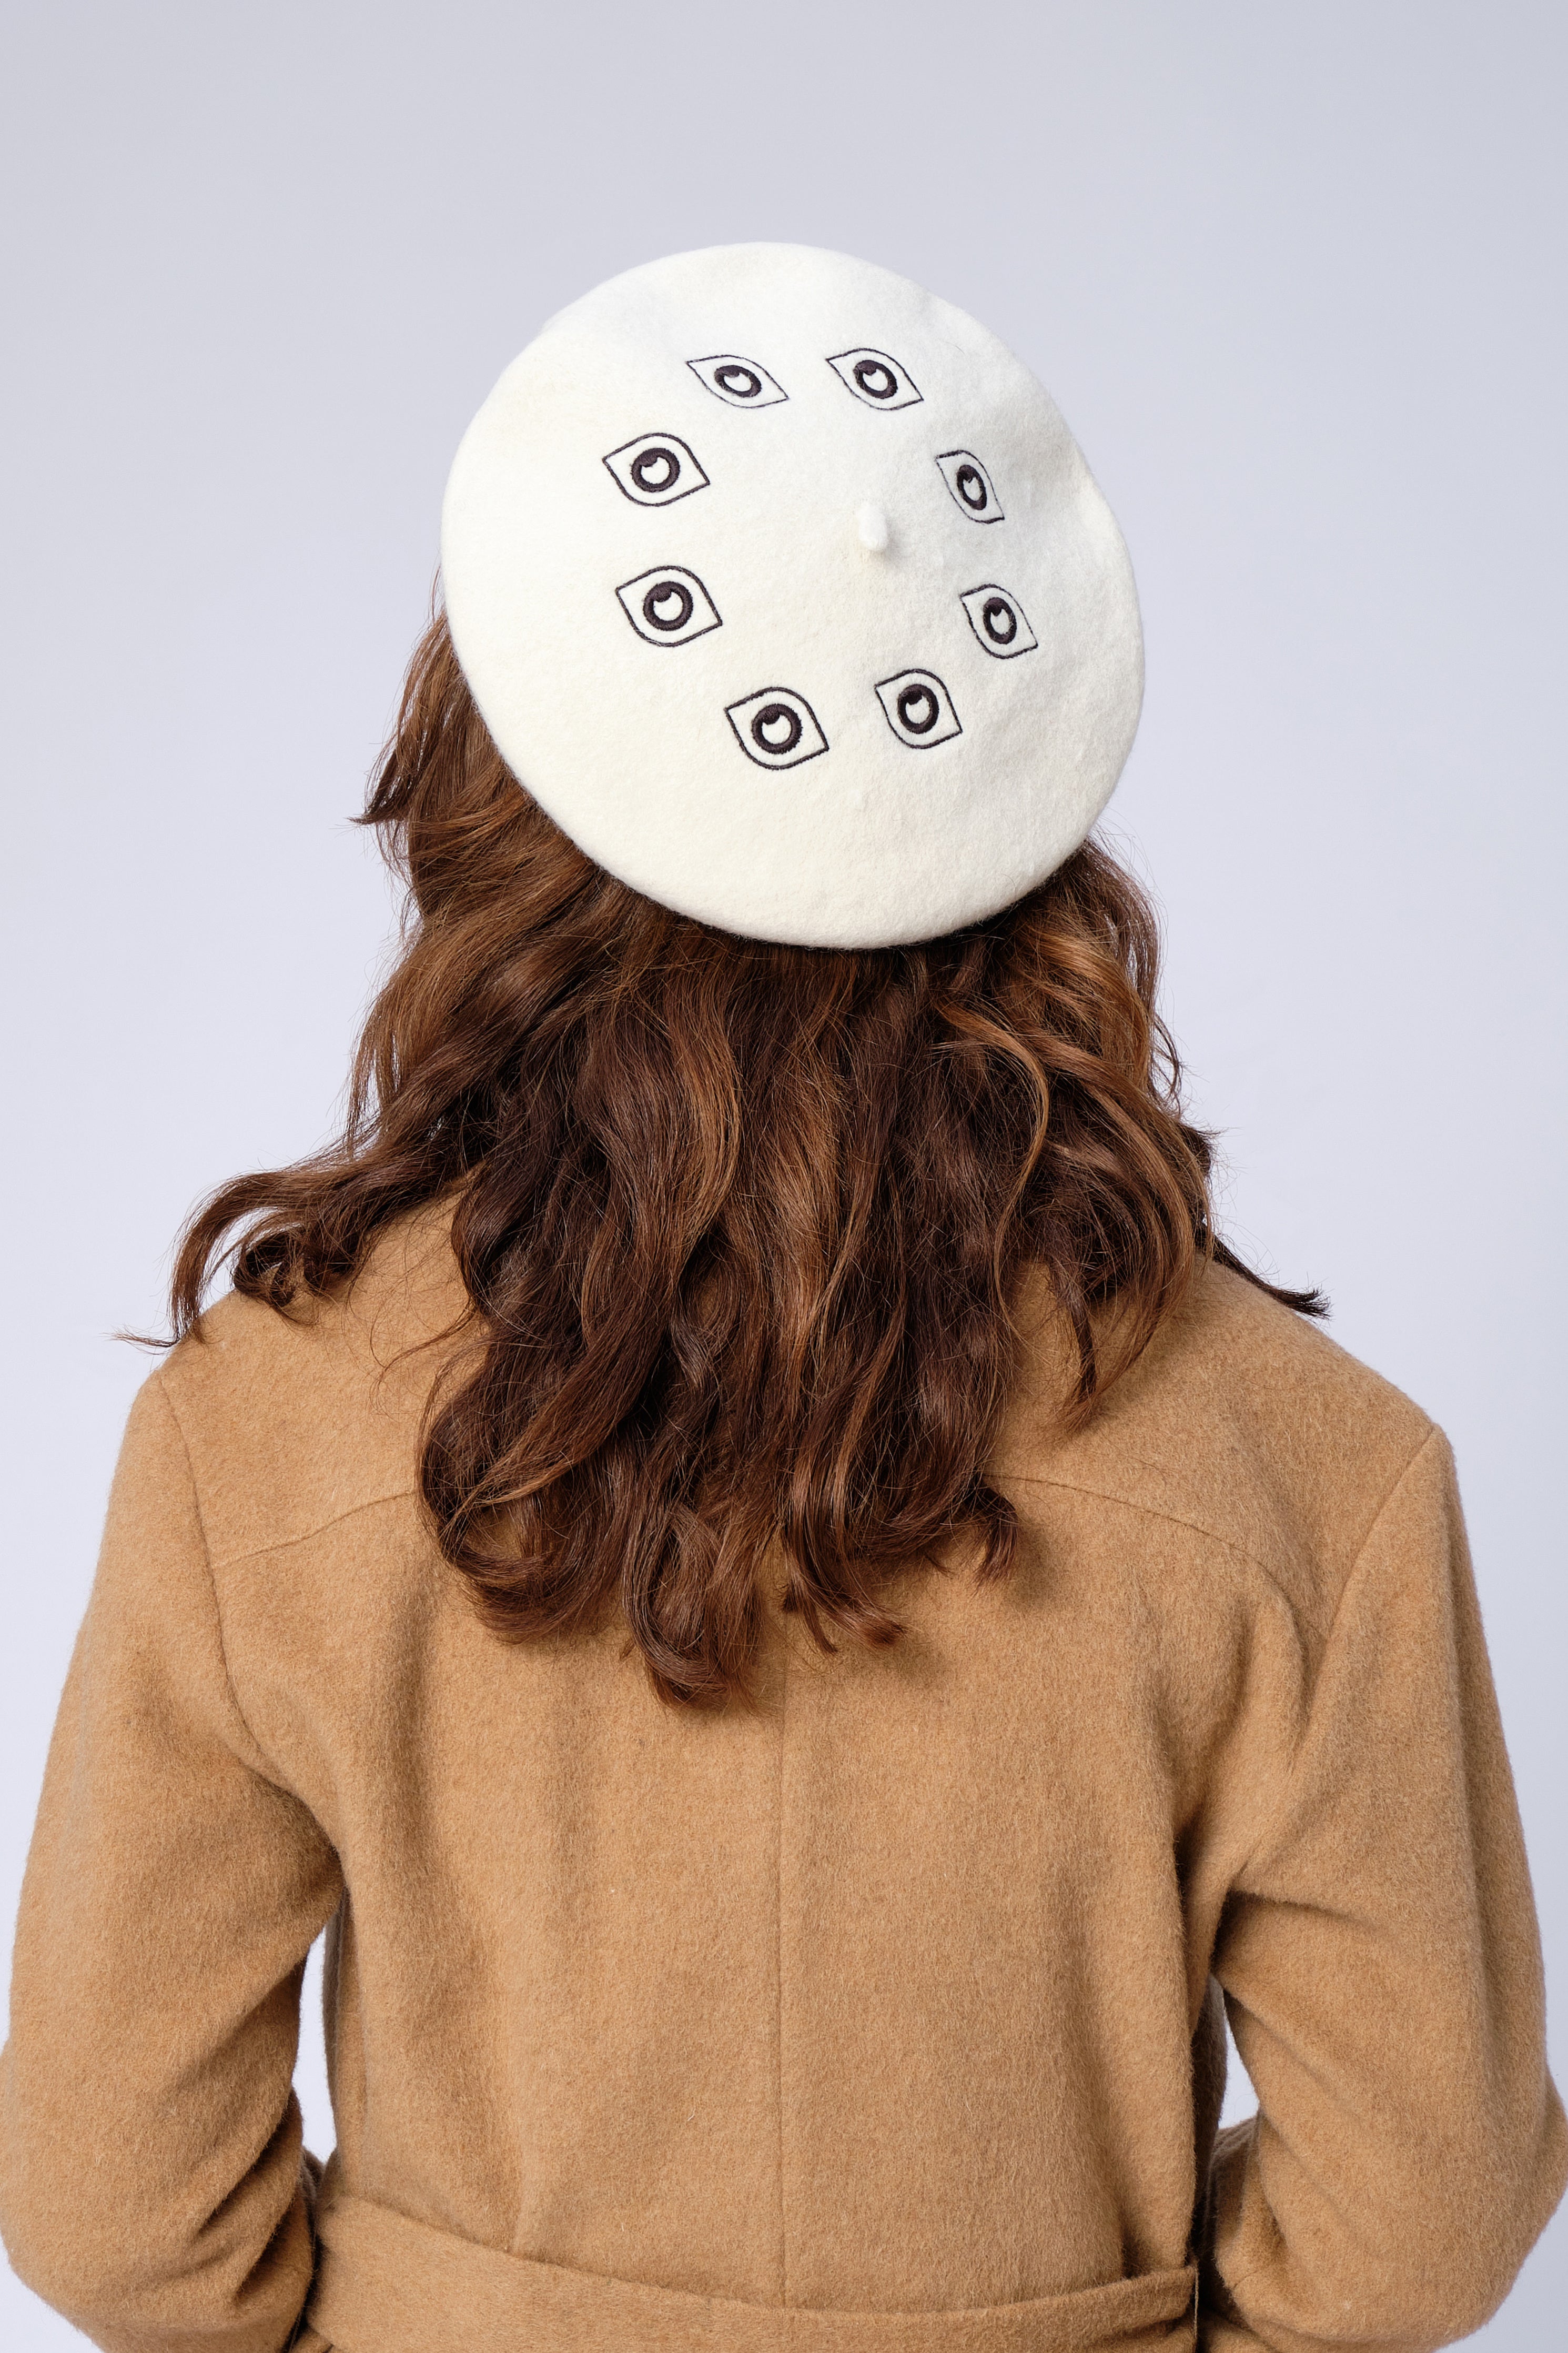 stillsveta cream colour beret with eyes all over